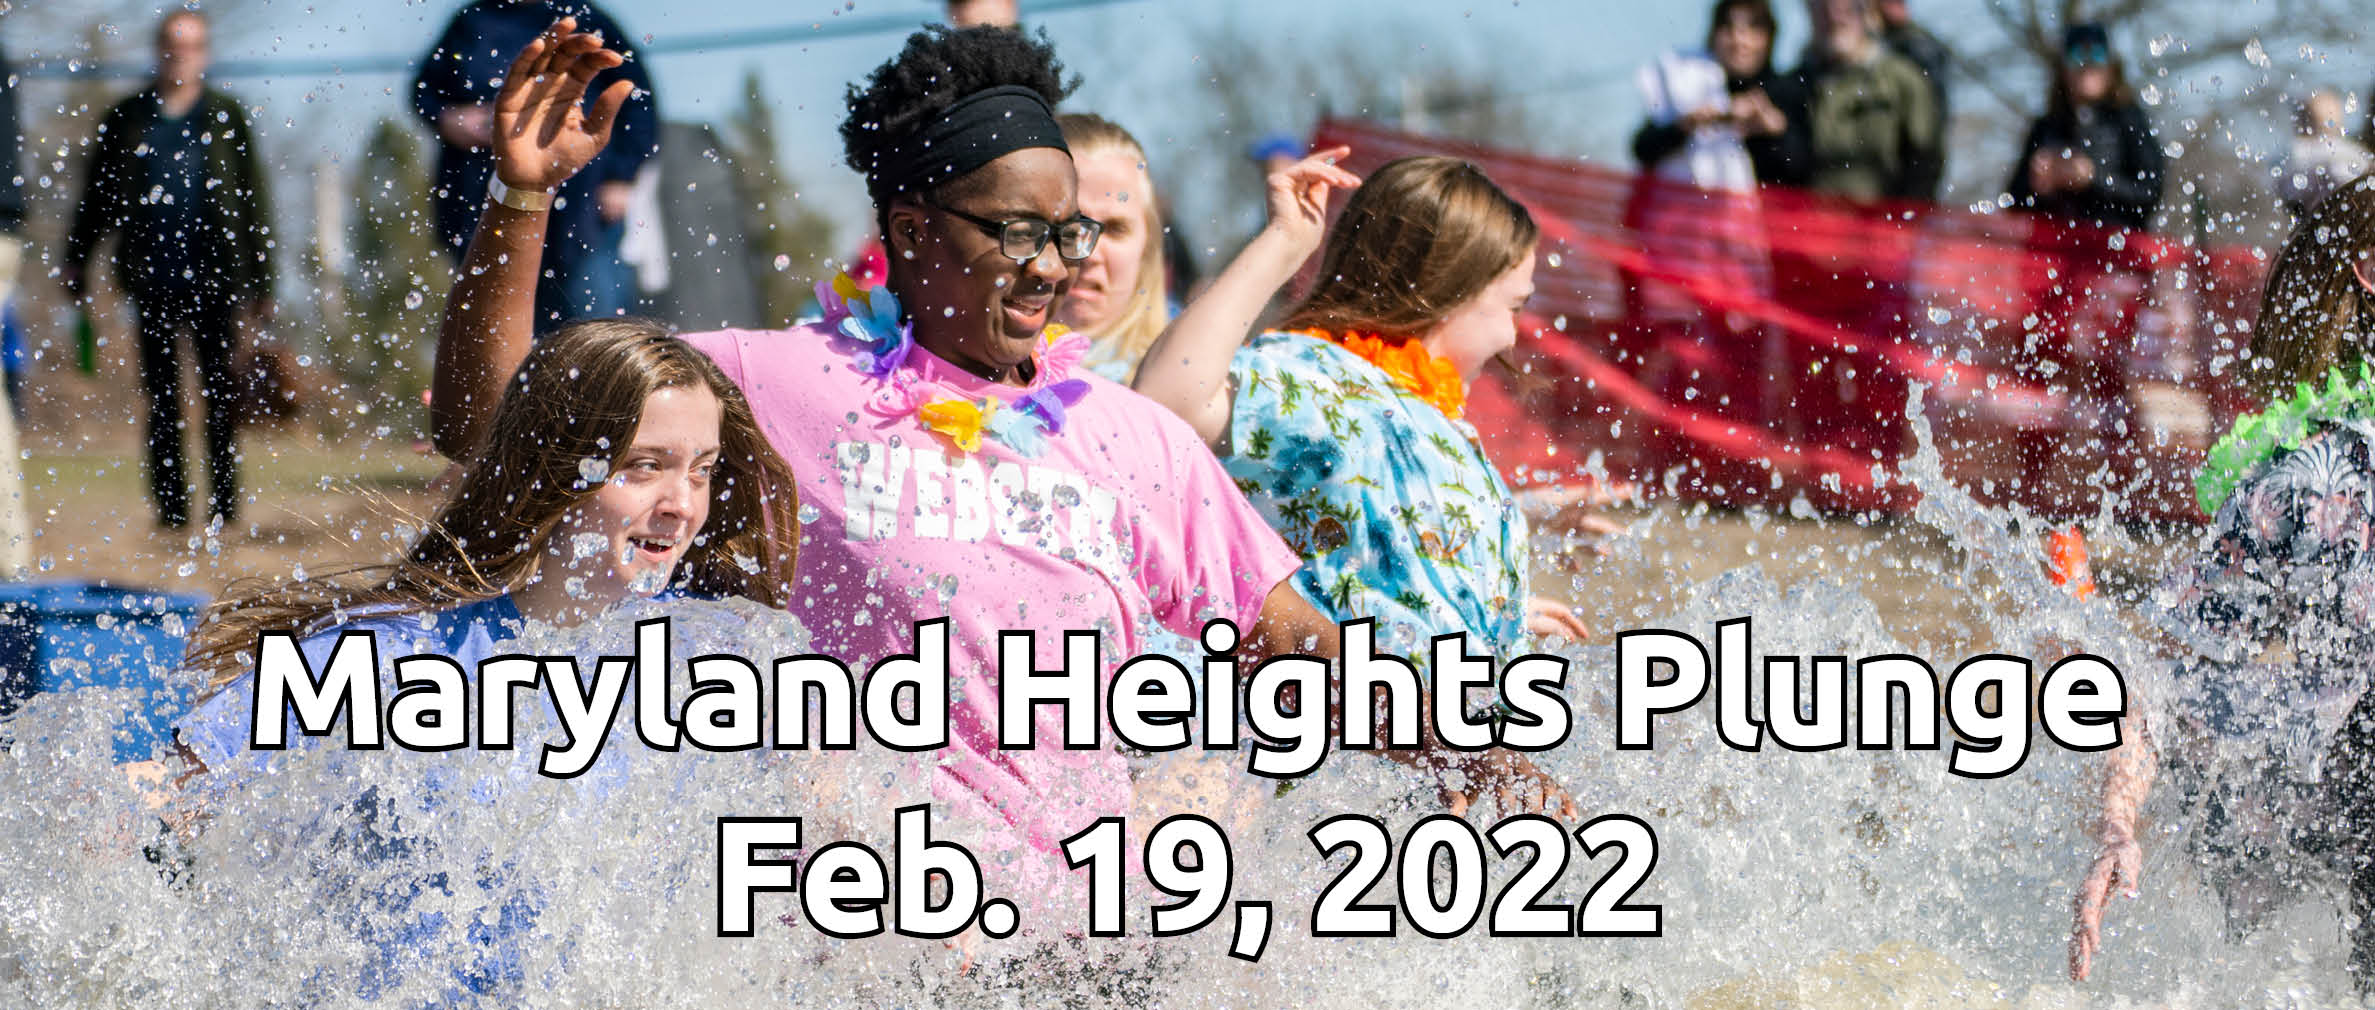 2022 Maryland Heights Plunge logo banner